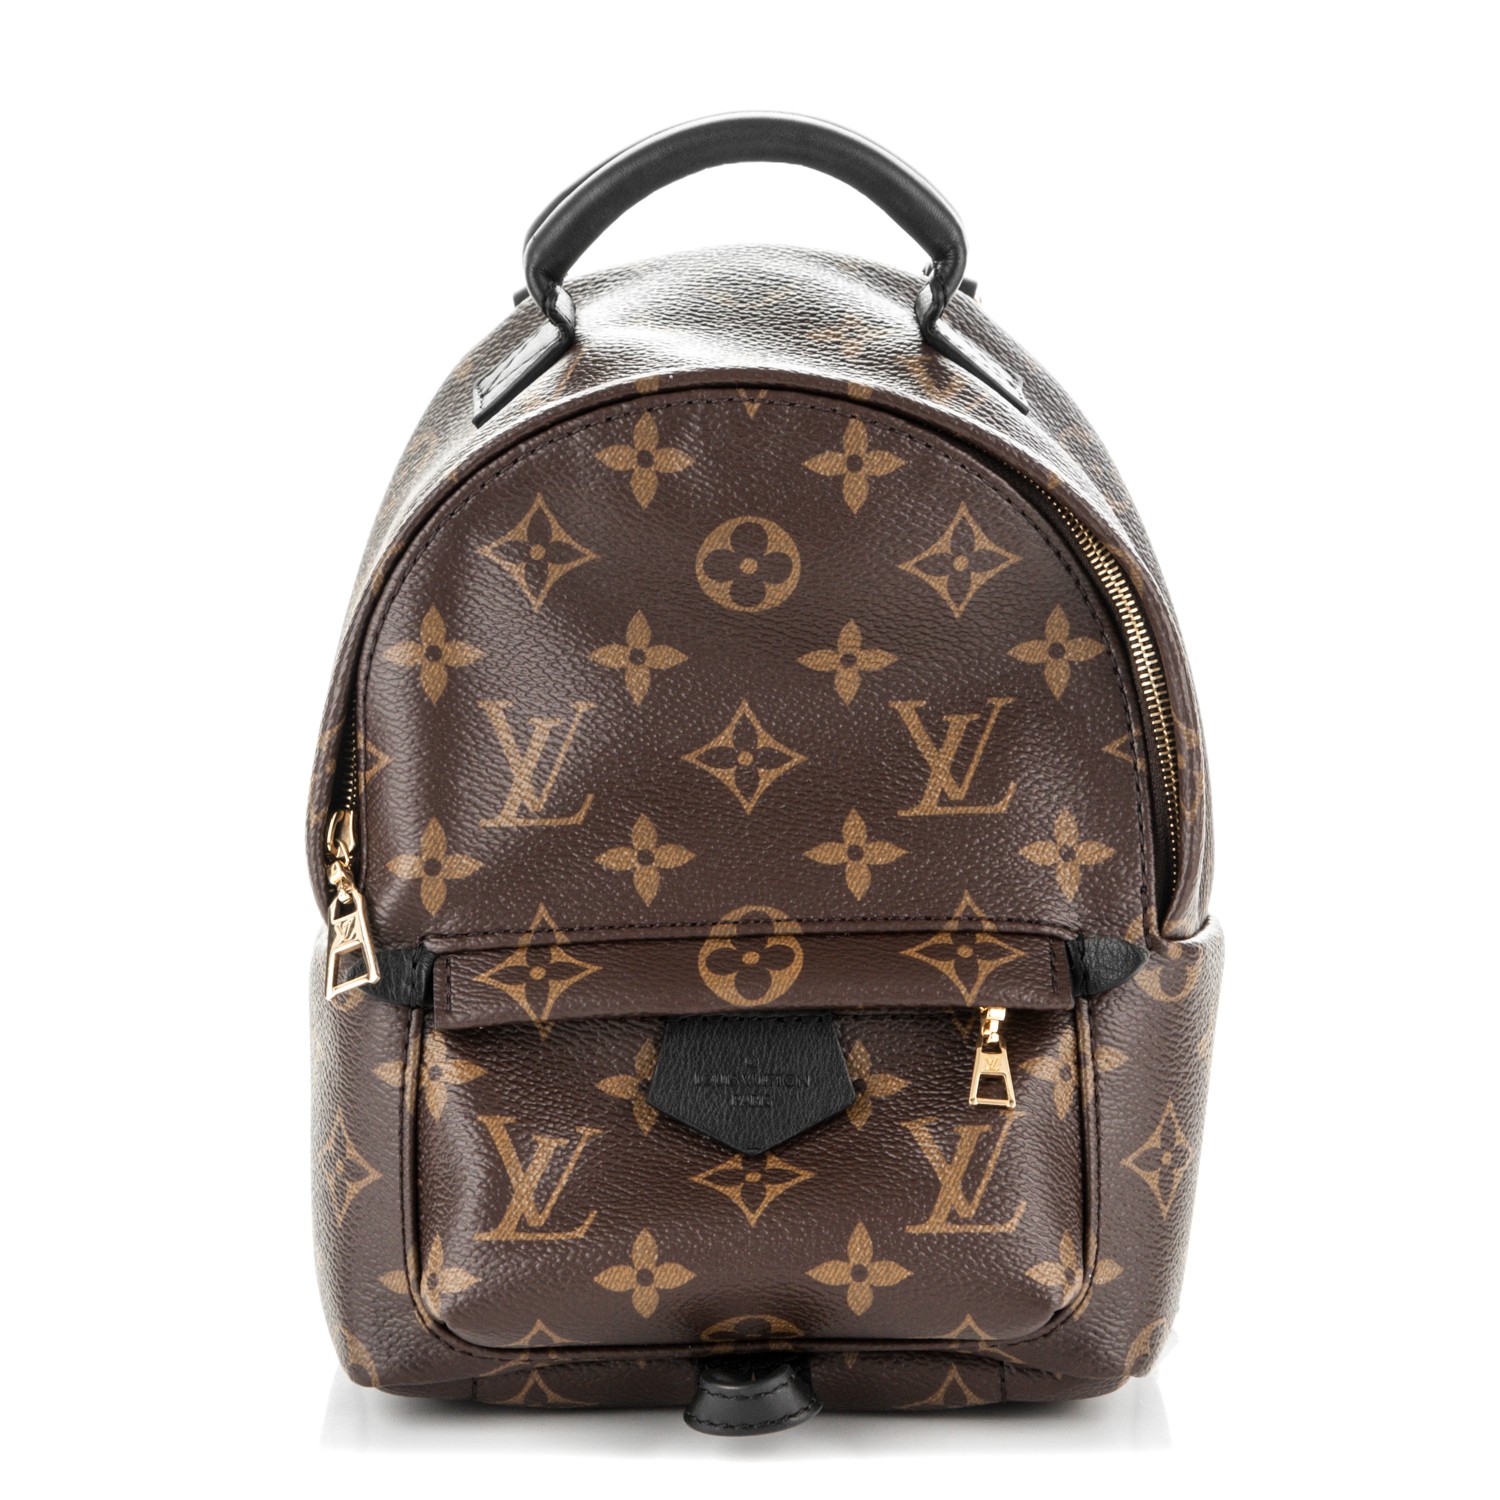 Louis Vuitton Handbags Outlet Near Me Ahoy Comics